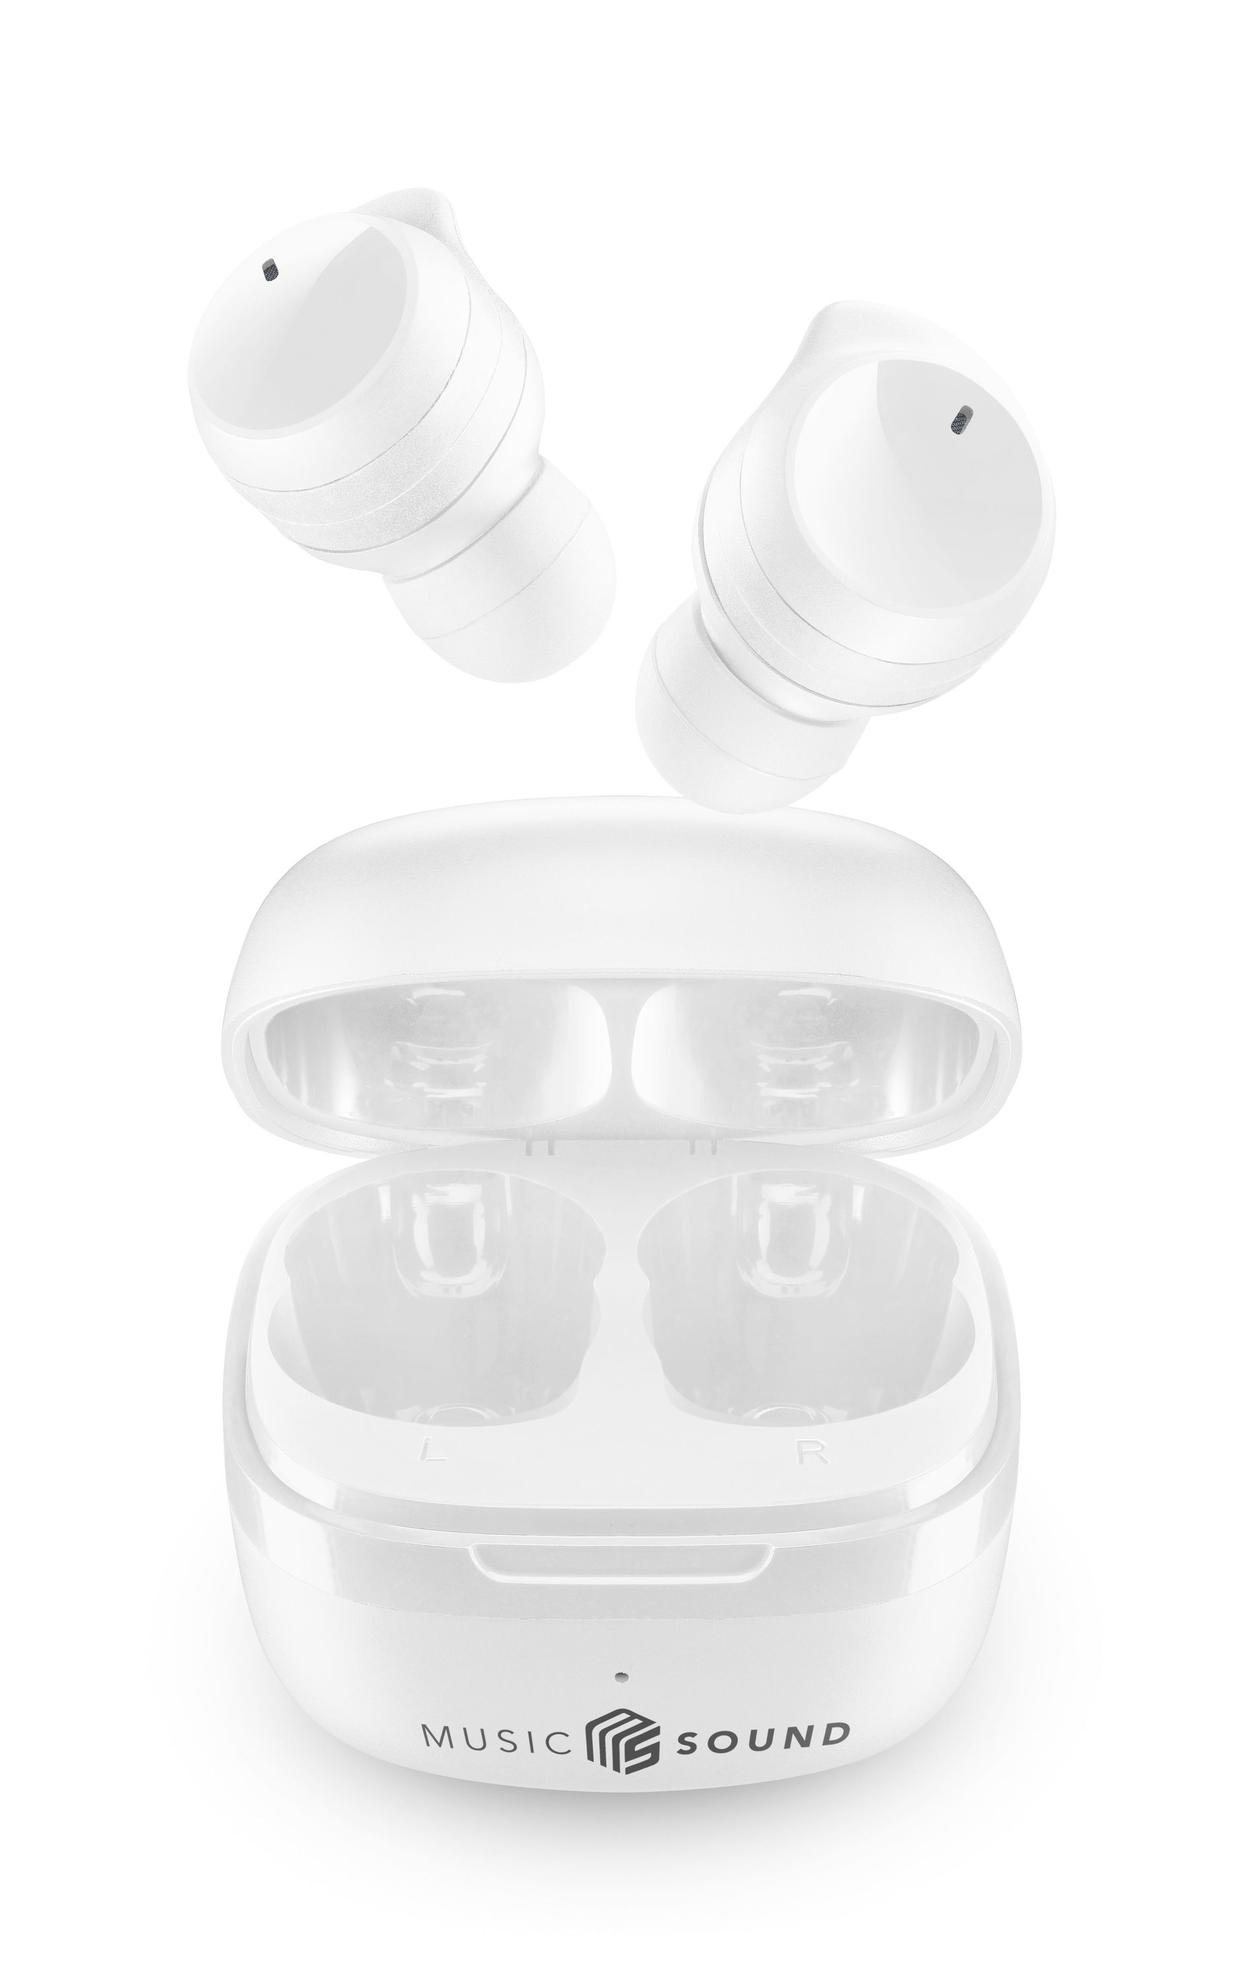 Offerta per Music sound - Flow Auricolare Wireless In-ear Musica e Chiamate Bluetooth Bianco a 19,95€ in Euronics